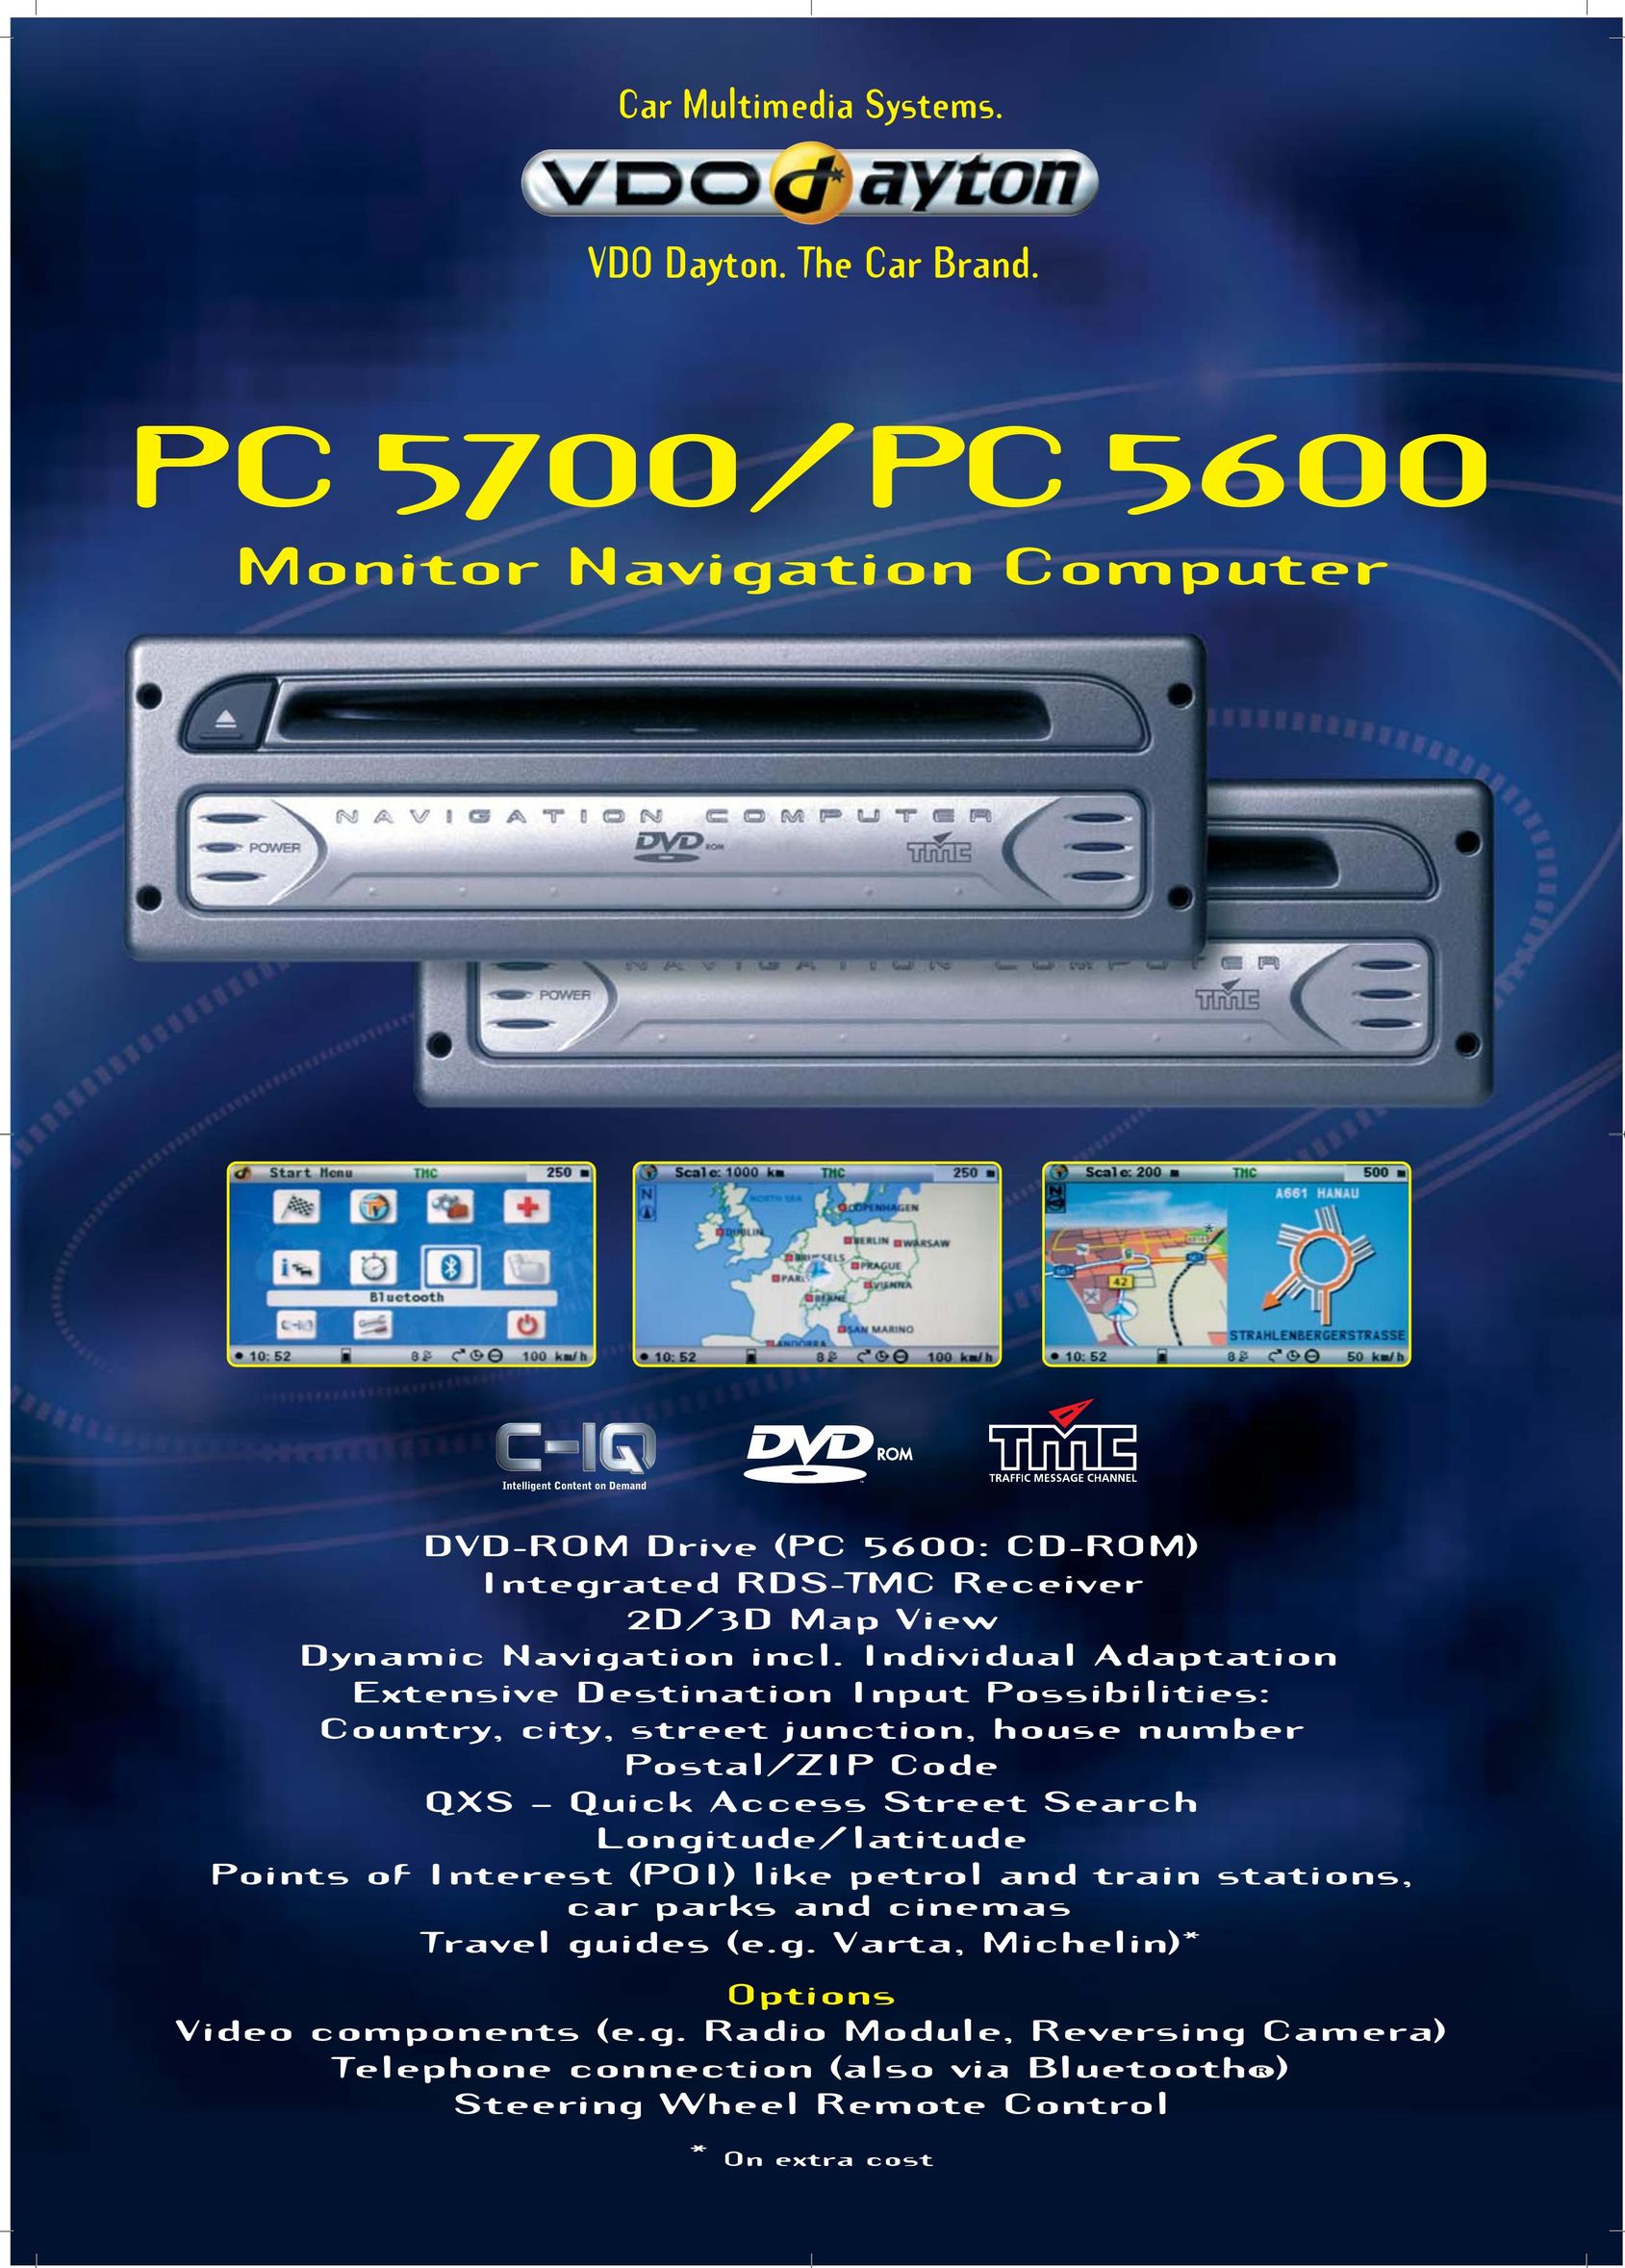 VDO Dayton PC 5700 Personal Computer User Manual